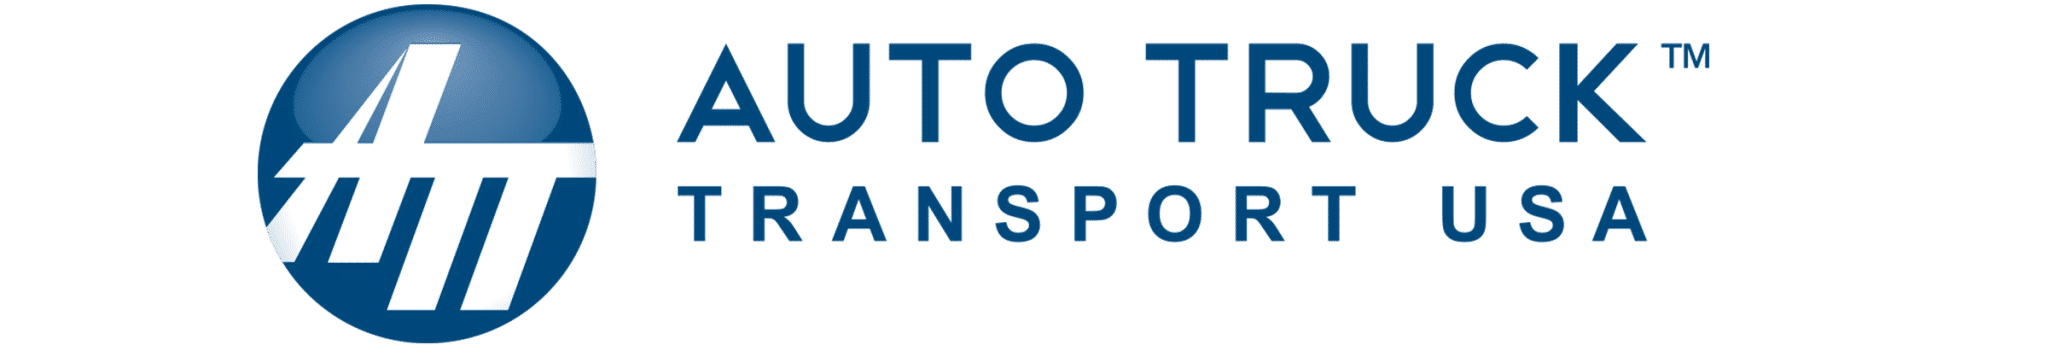 auto truck transport